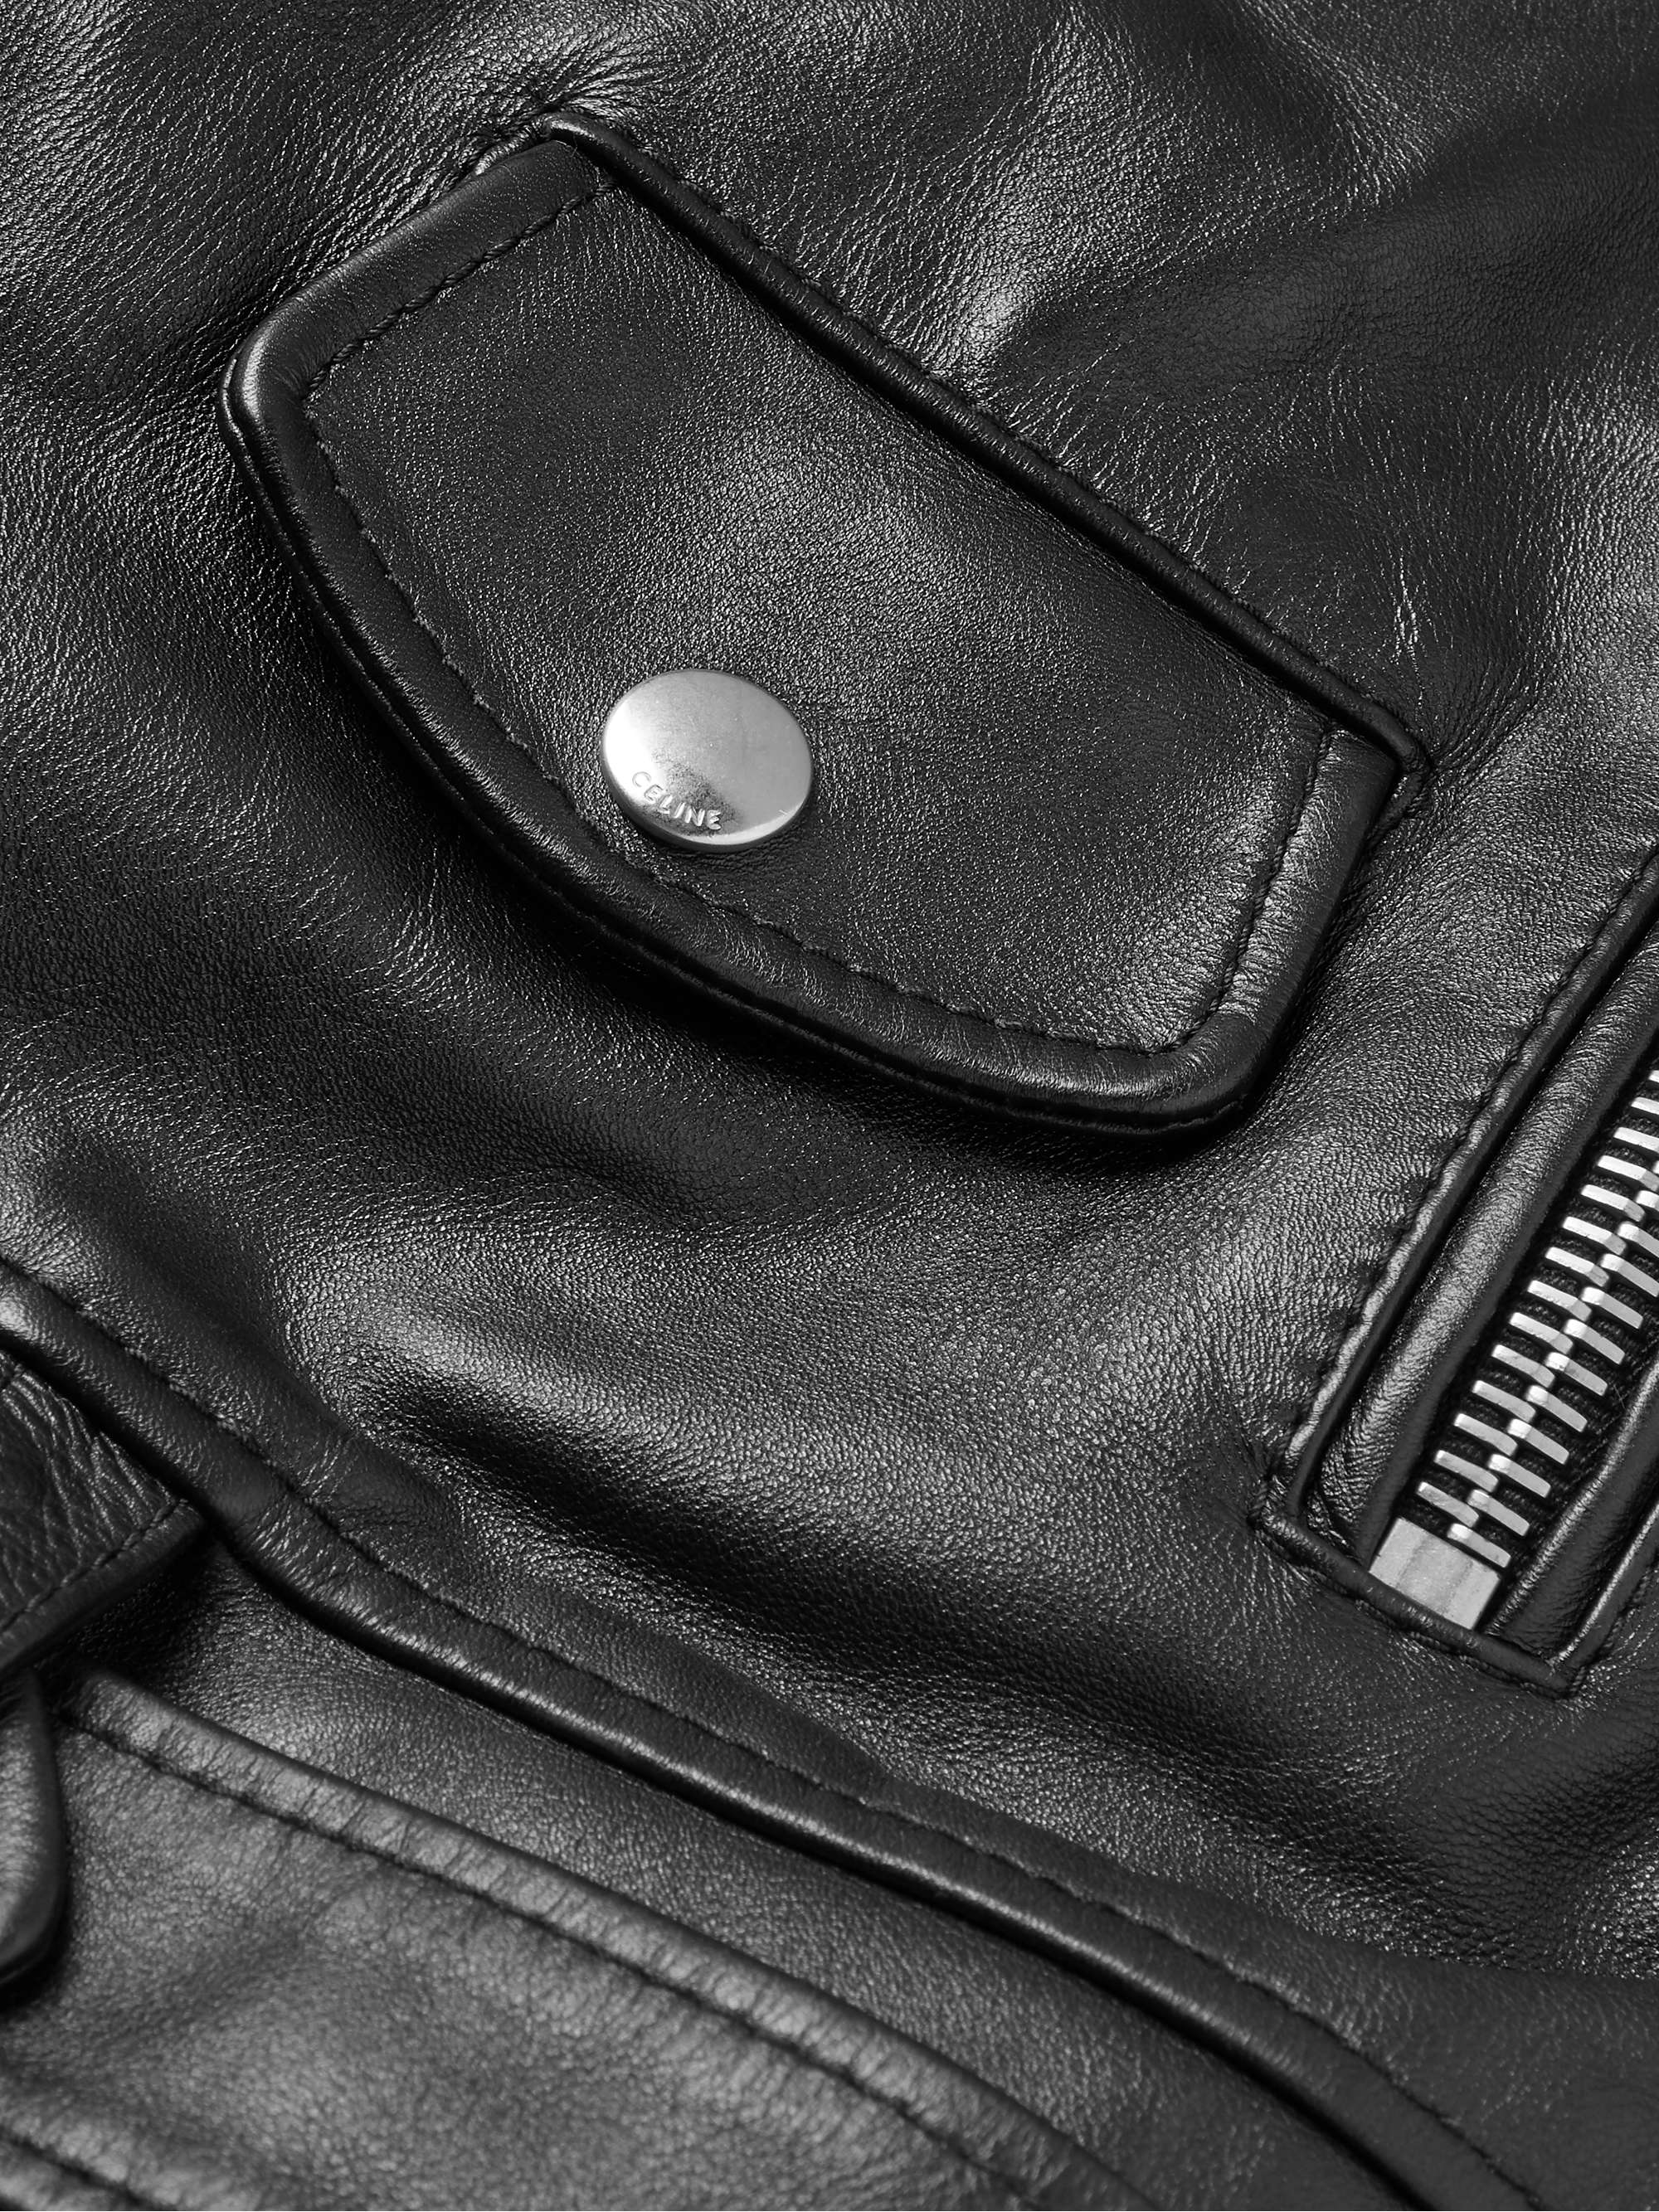 CELINE HOMME Leather Jacket